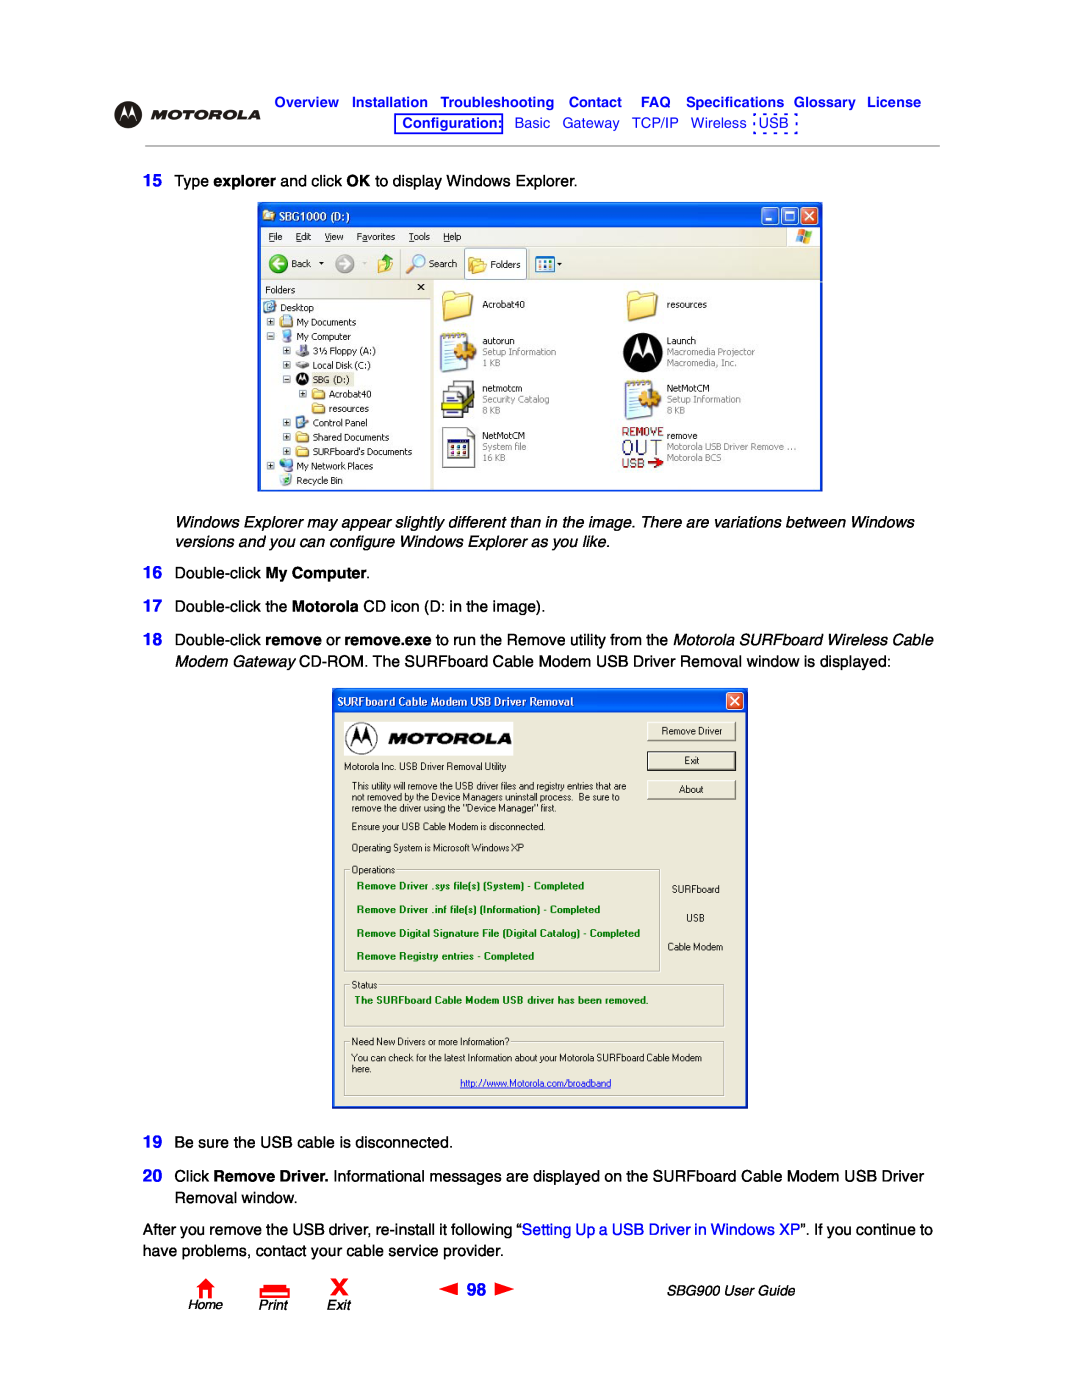 Motorola SBG900 manual Type explorer and click OK to display Windows Explorer 